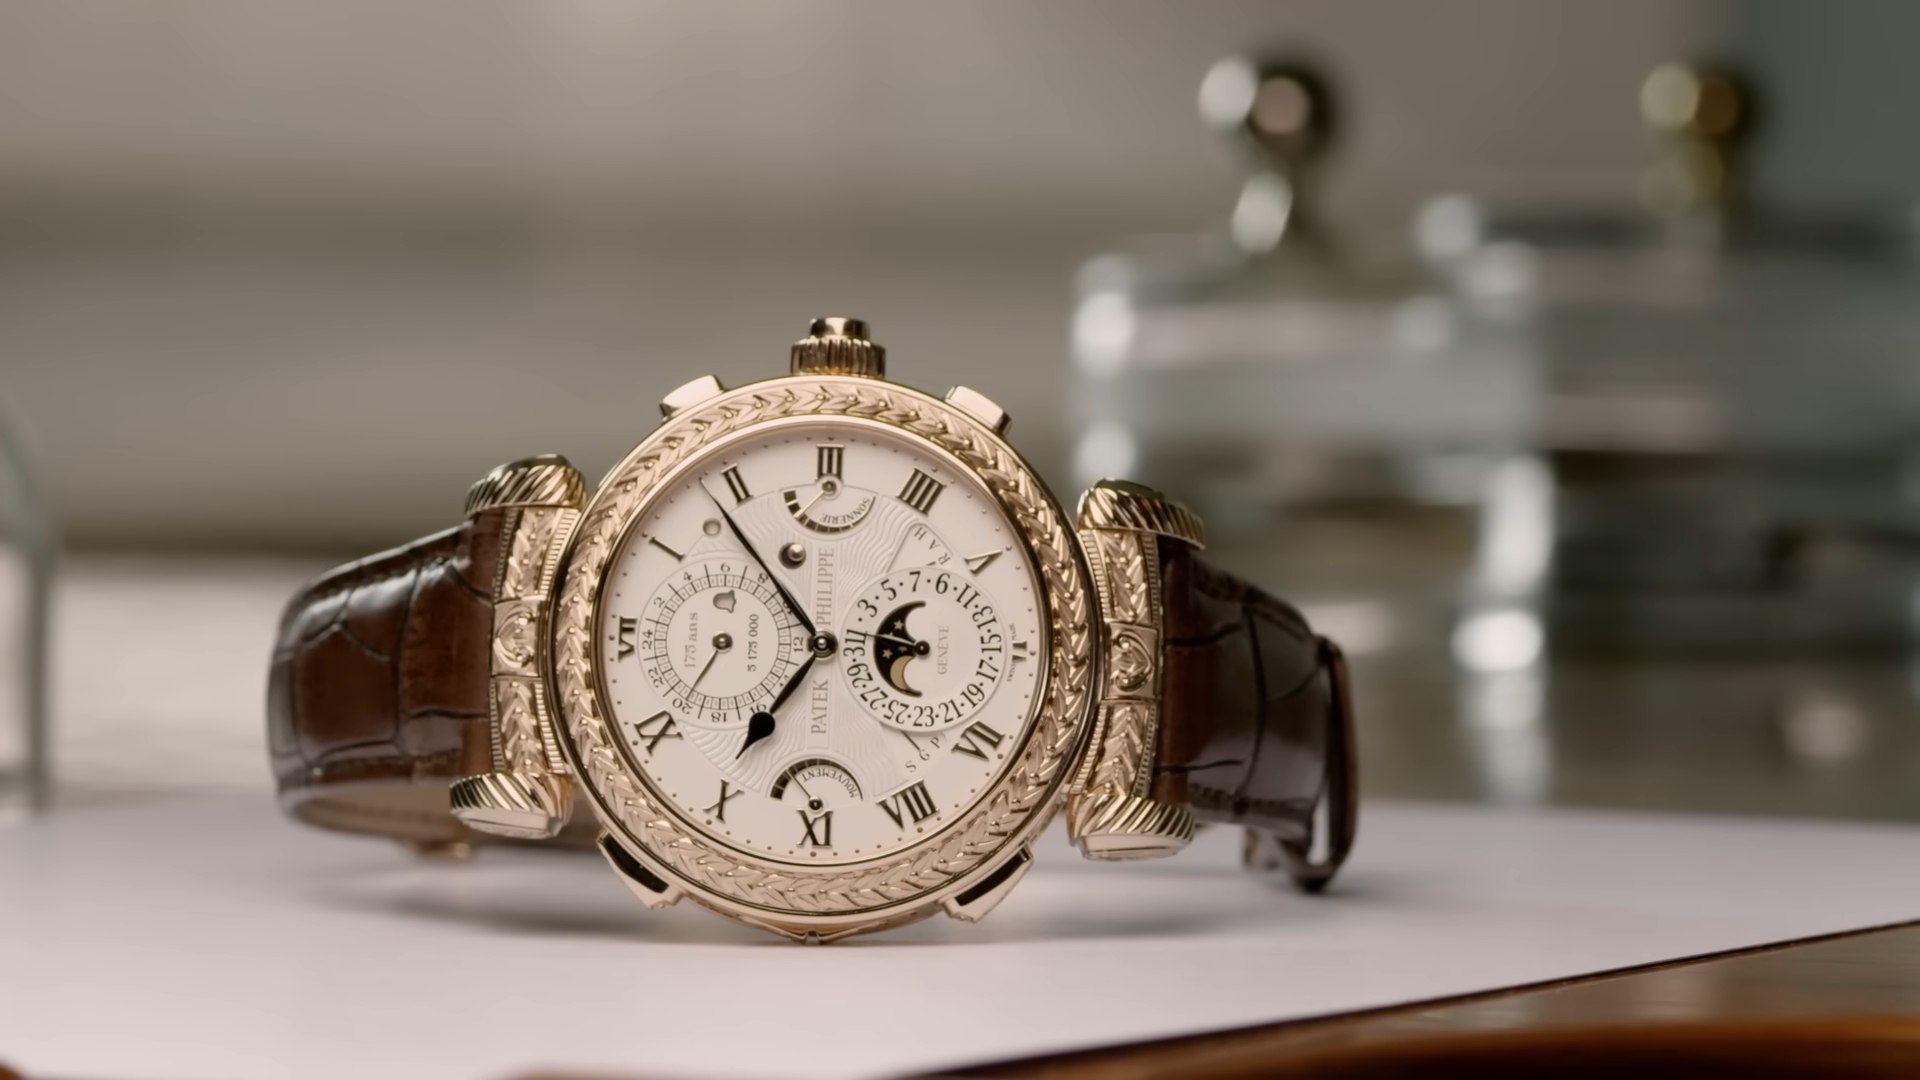 Patek Philippe Grandmaster Chime - expensive watch